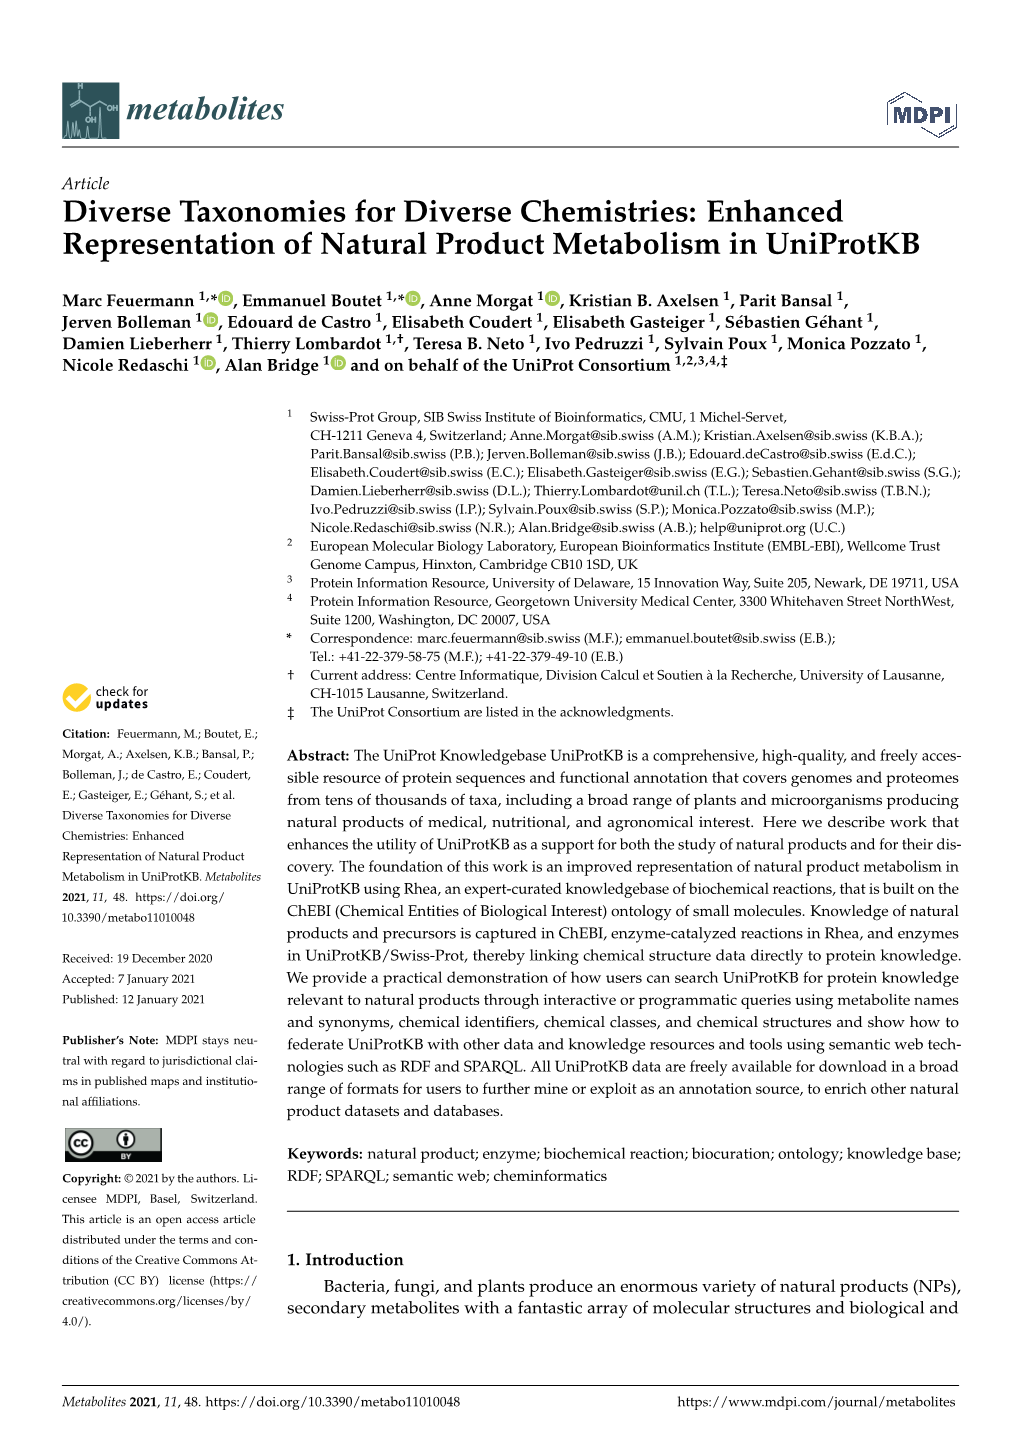 Enhanced Representation of Natural Product Metabolism in Uniprotkb